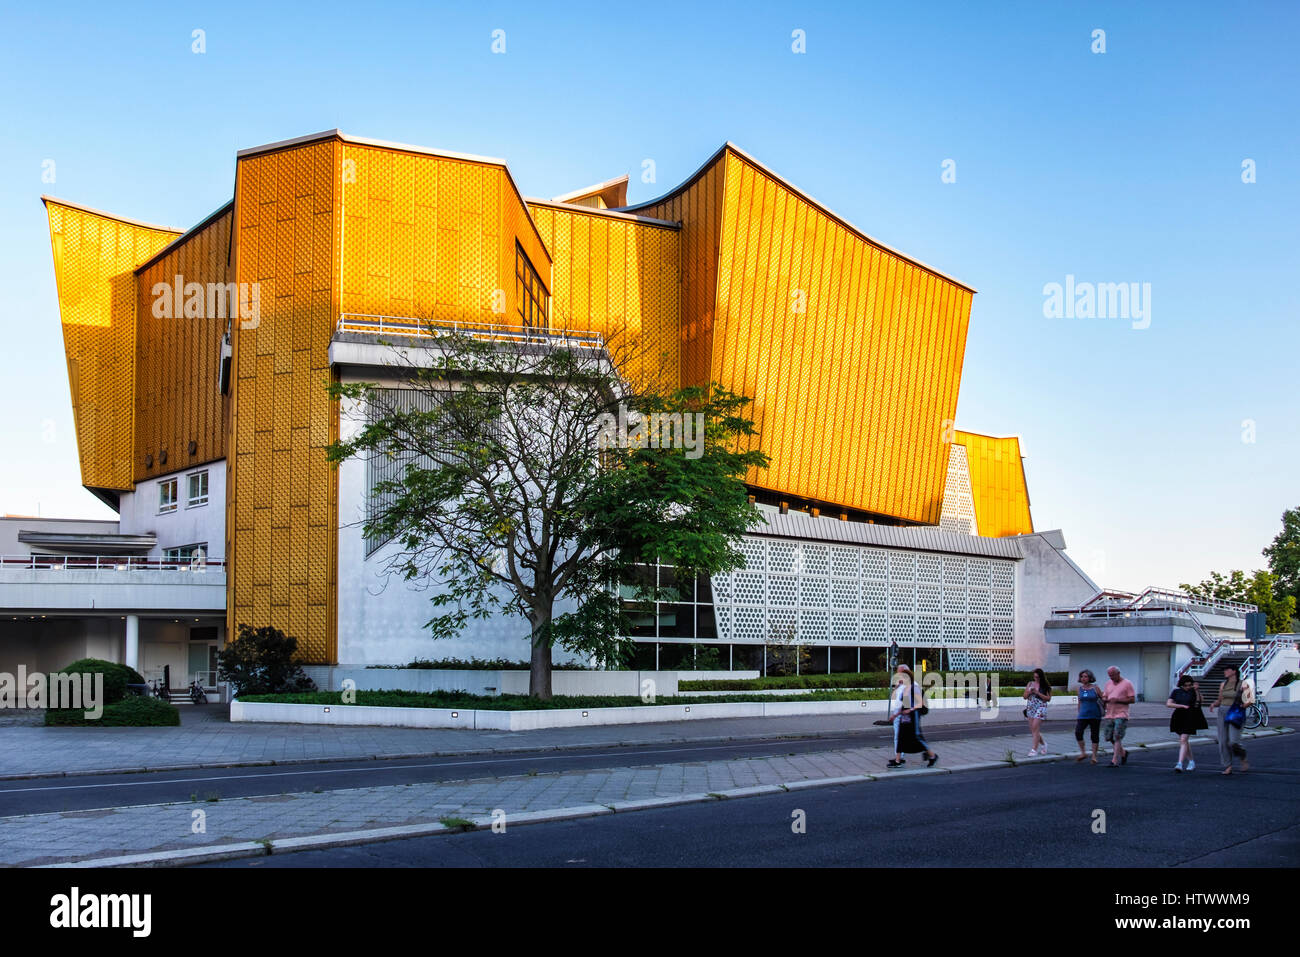 Berliner Philharmonie,Berlin Philharmonic Concert Hall designed by Hans Scharoun. classical concert venue, building exterior, modern architecture Stock Photo